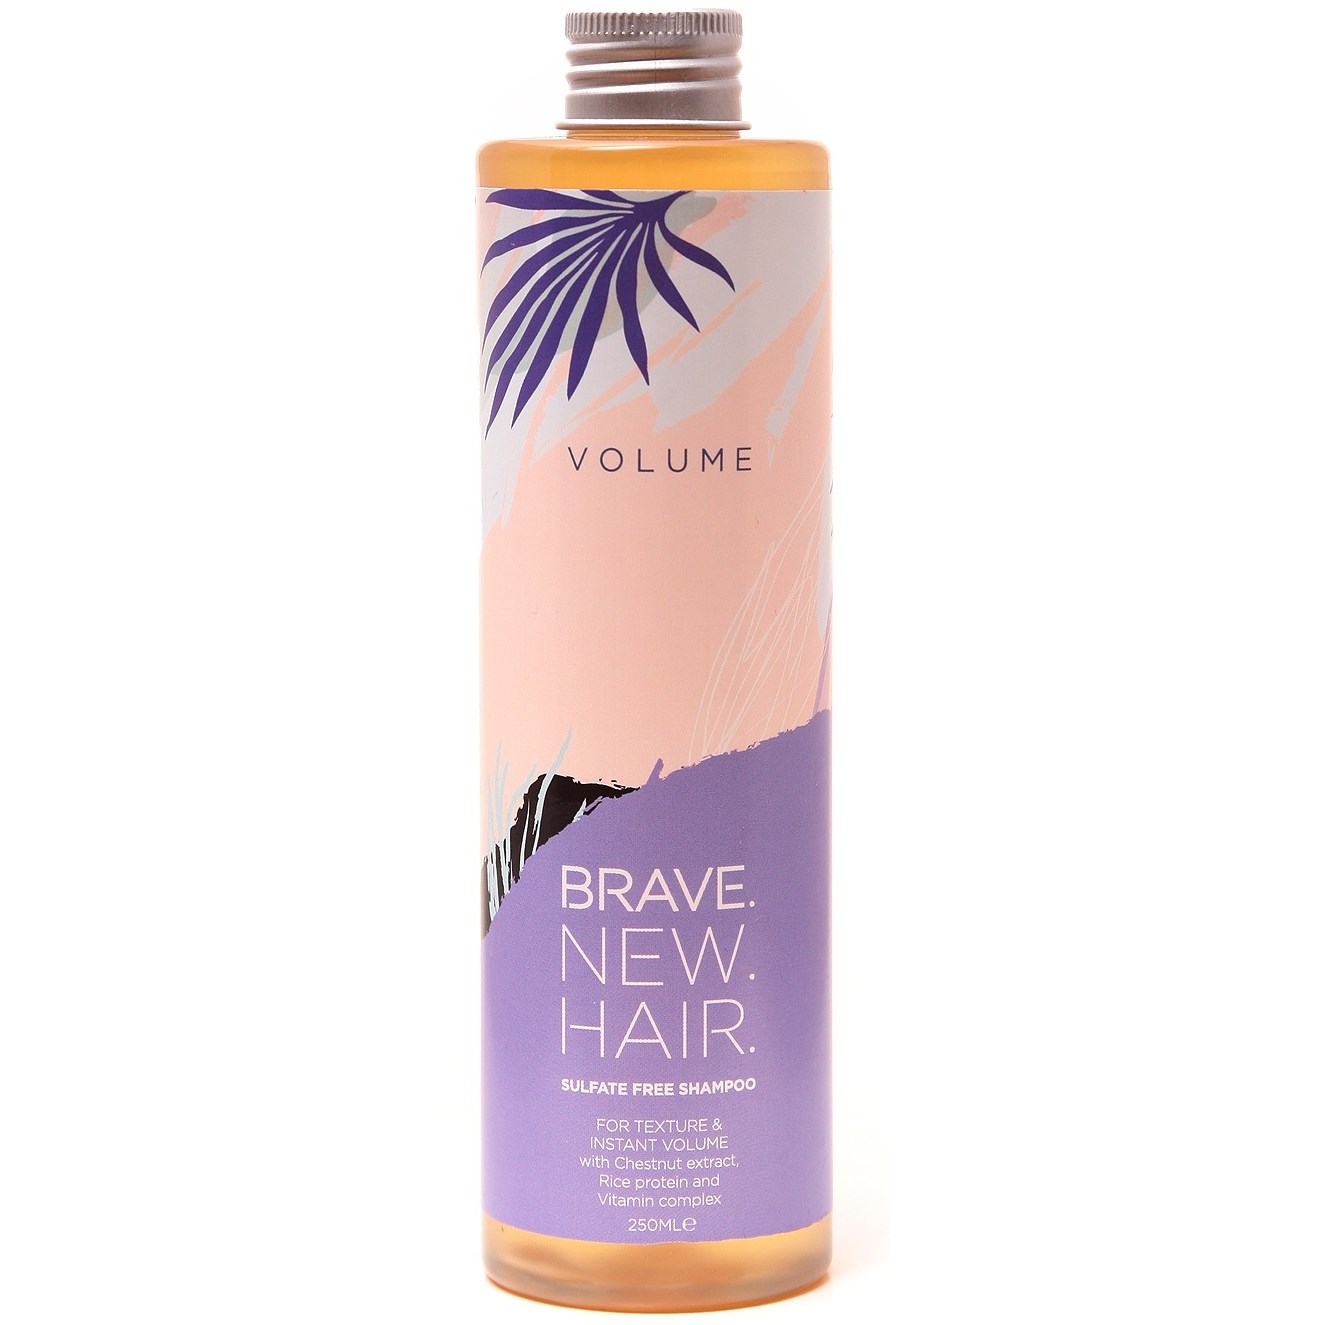 Brave. New. Hair. Volume Shampoo 250ml